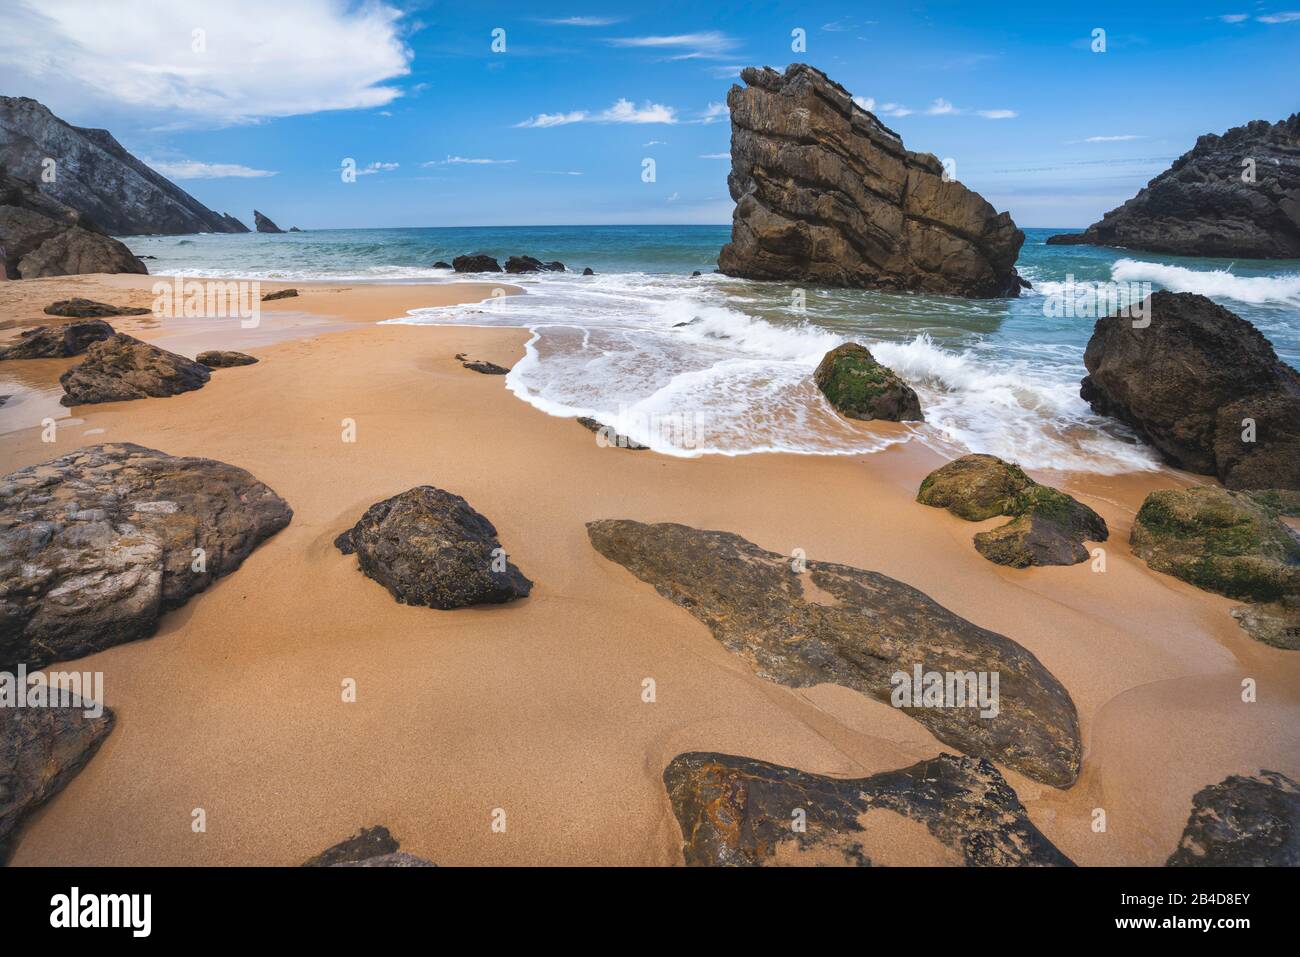 Praia da adraga hi-res stock photography and images - Alamy